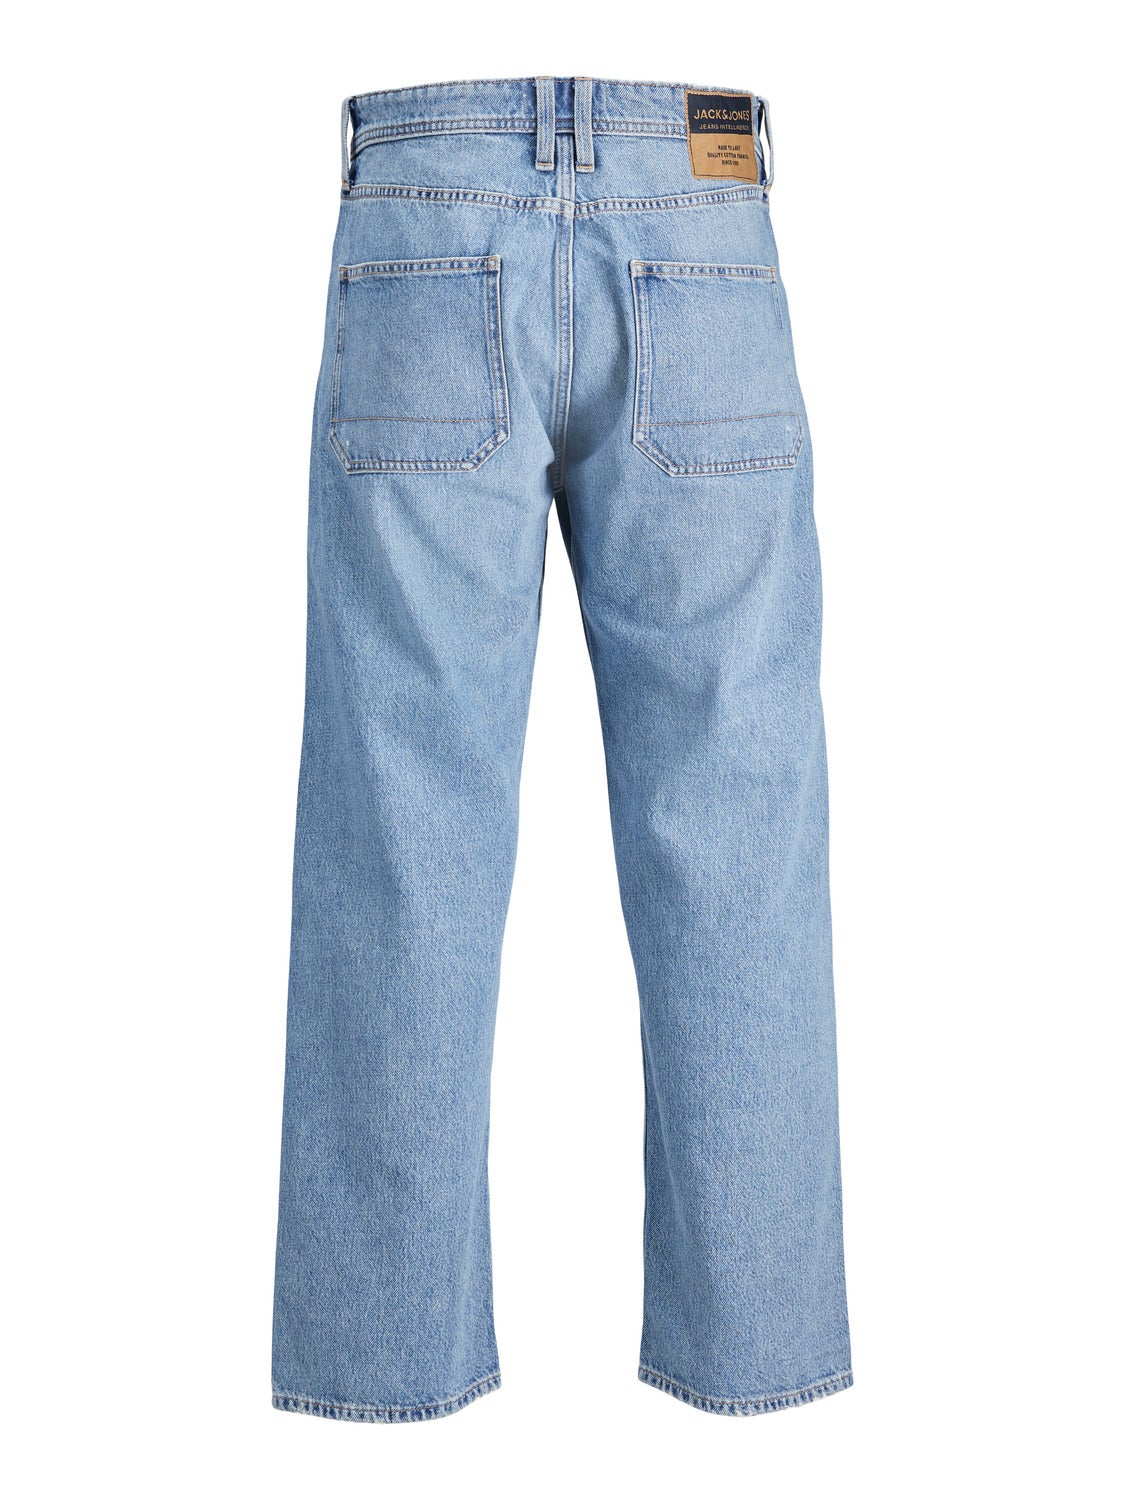 JJIALEX JJCARPENTER SBD 111 Baggy fit jeans